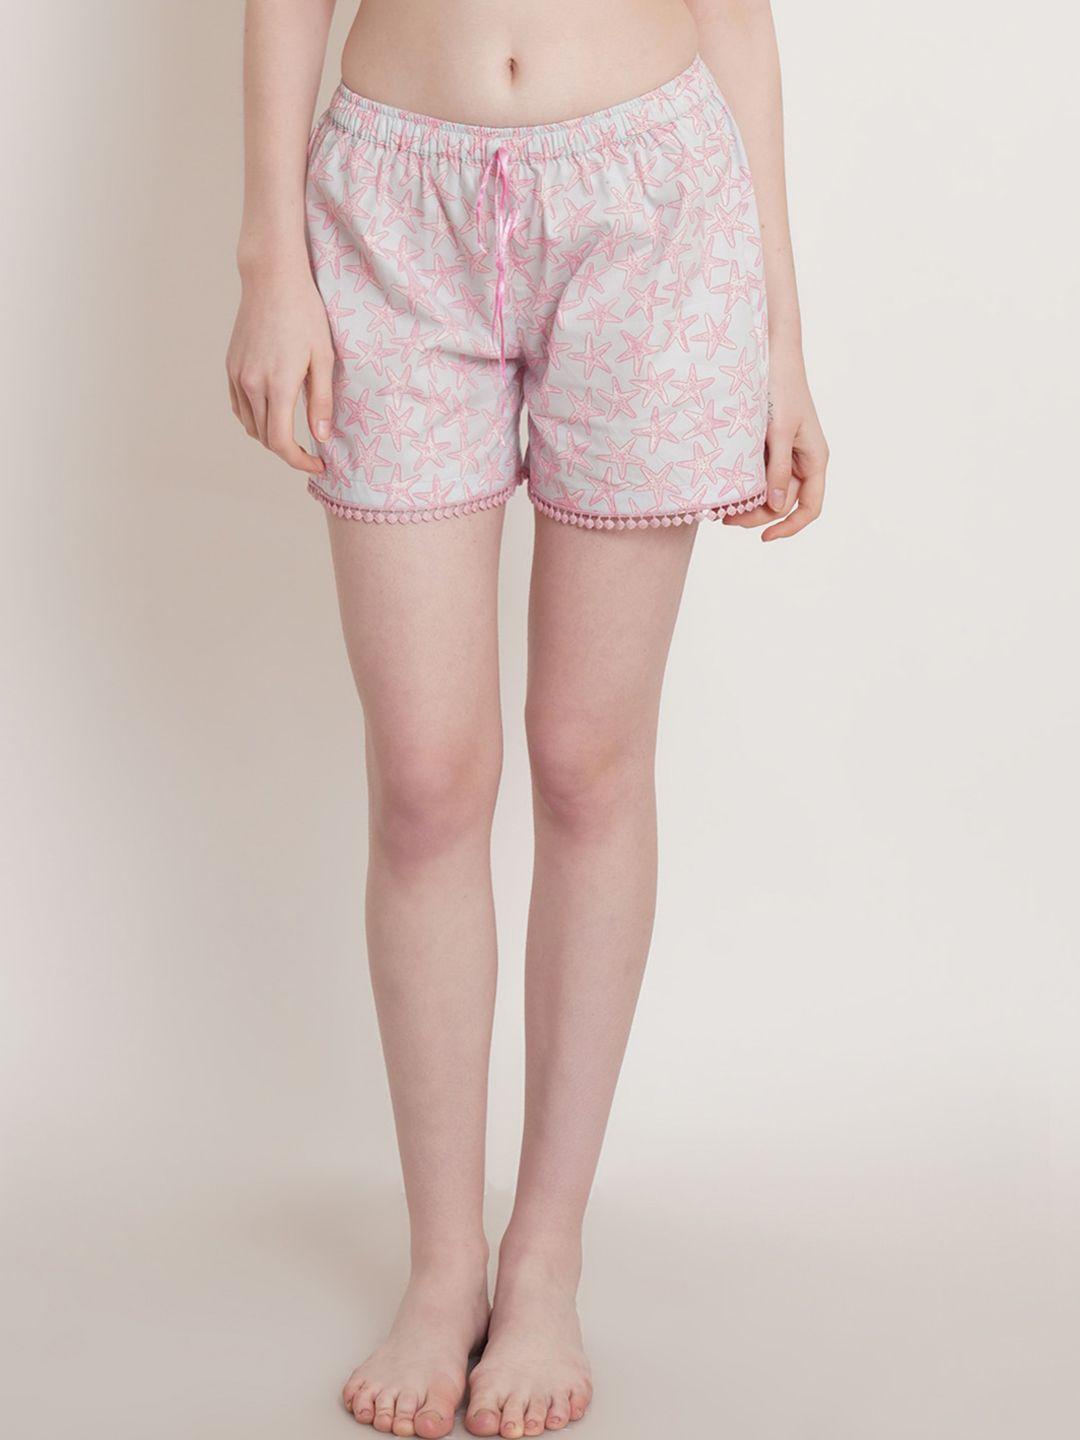 hive91-women-pink-printed-shorts